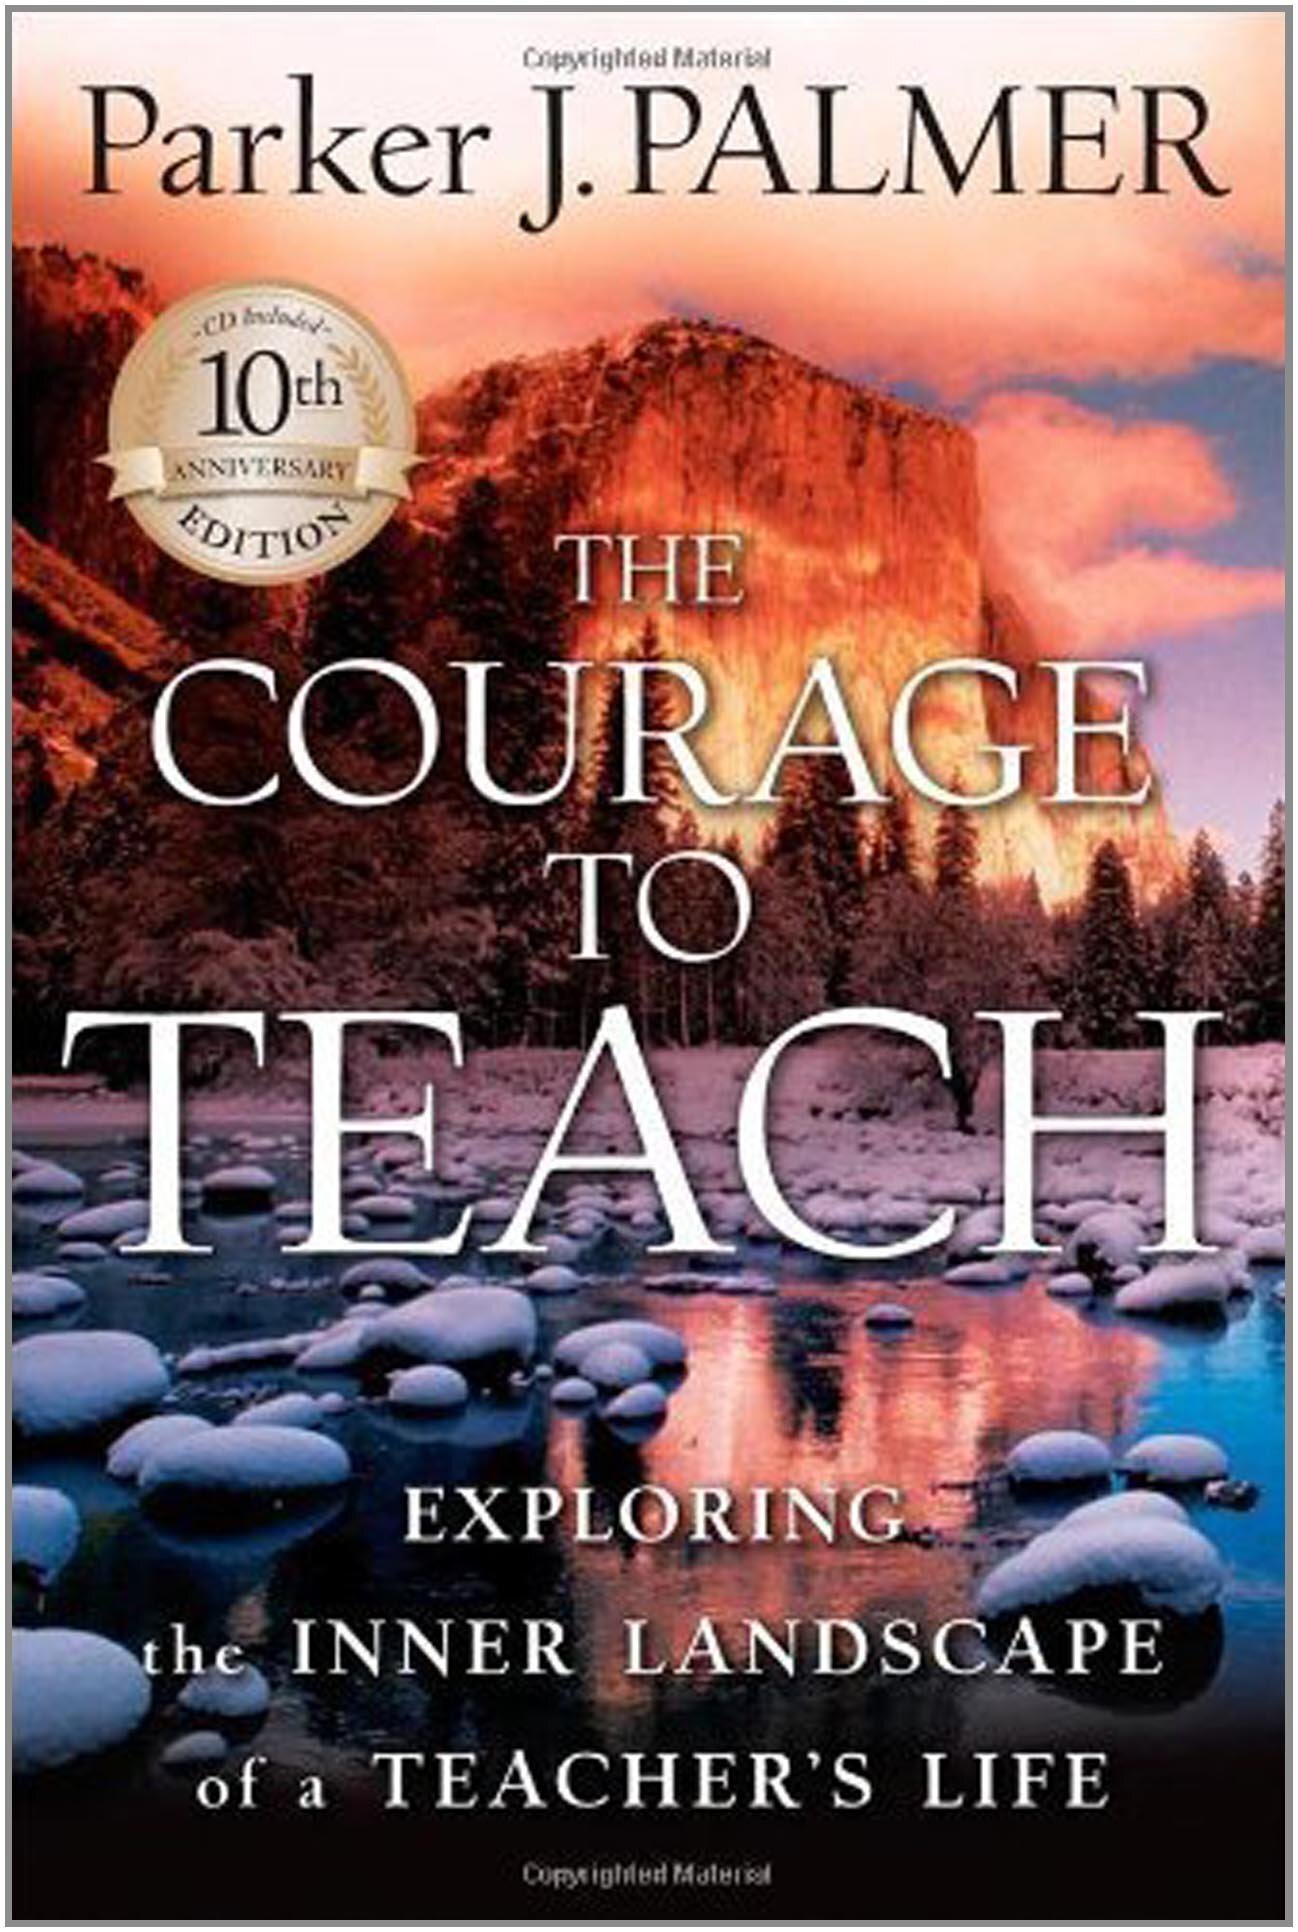 The Courage to Teach: Exploring the Inner Landscape of a Teacher's Life - Parker J. Palmer, Stefan Rudnicki, et al.